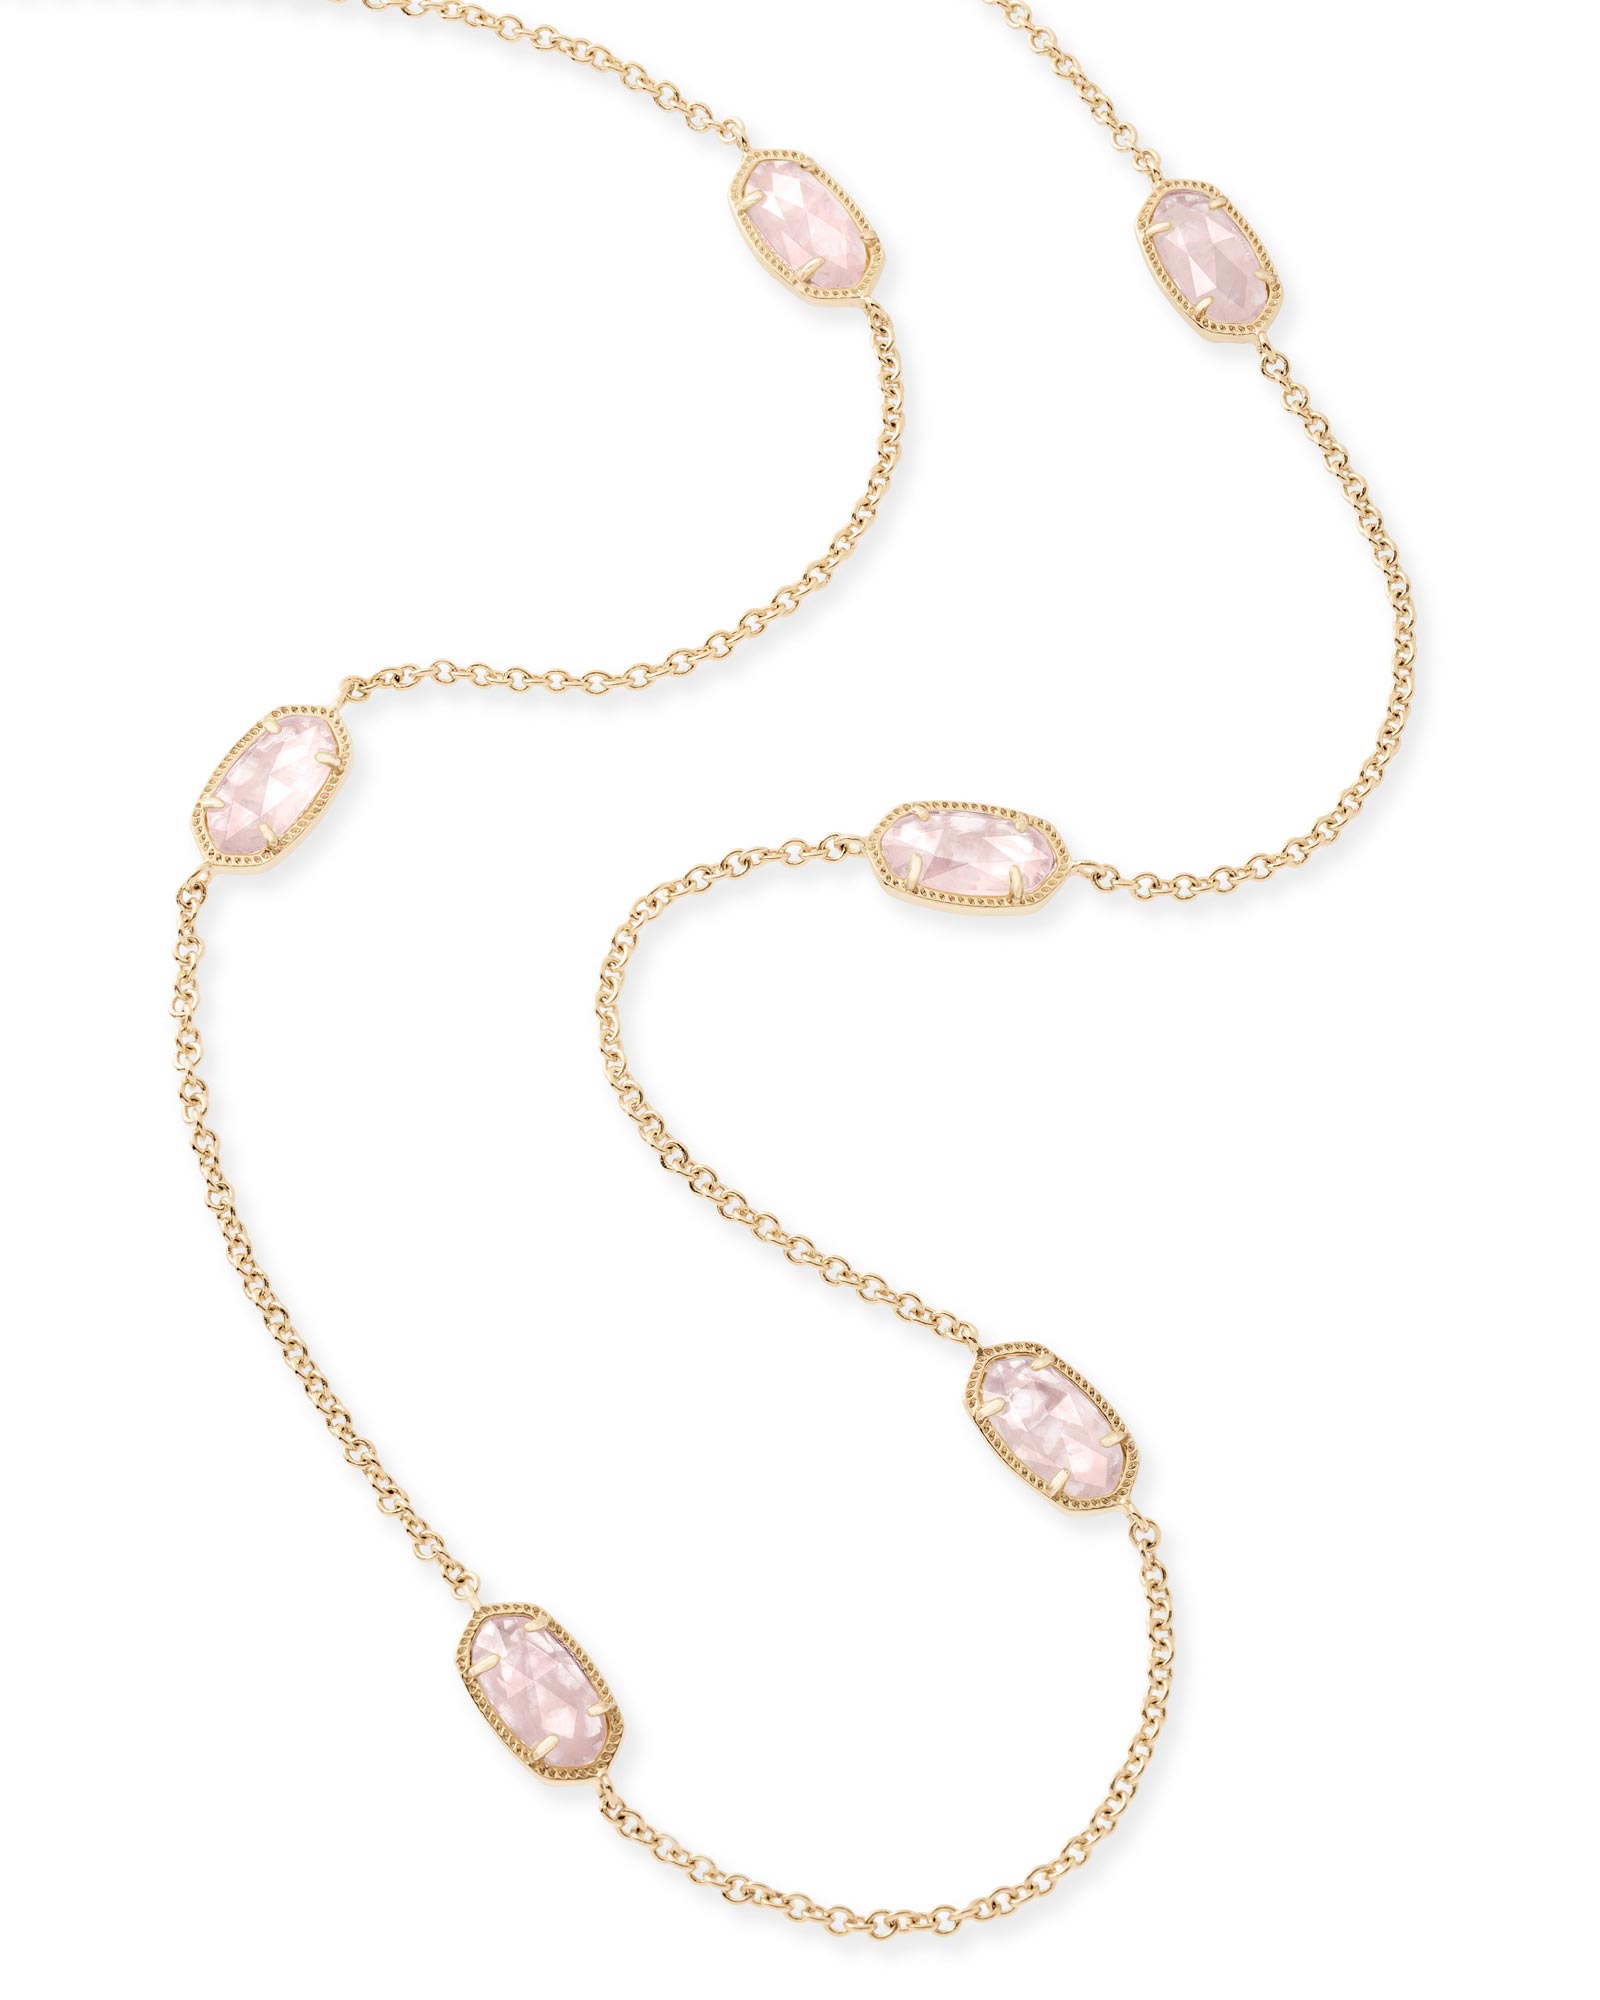 Kellie Long Gold Necklace in Rose Quartz | Kendra Scott